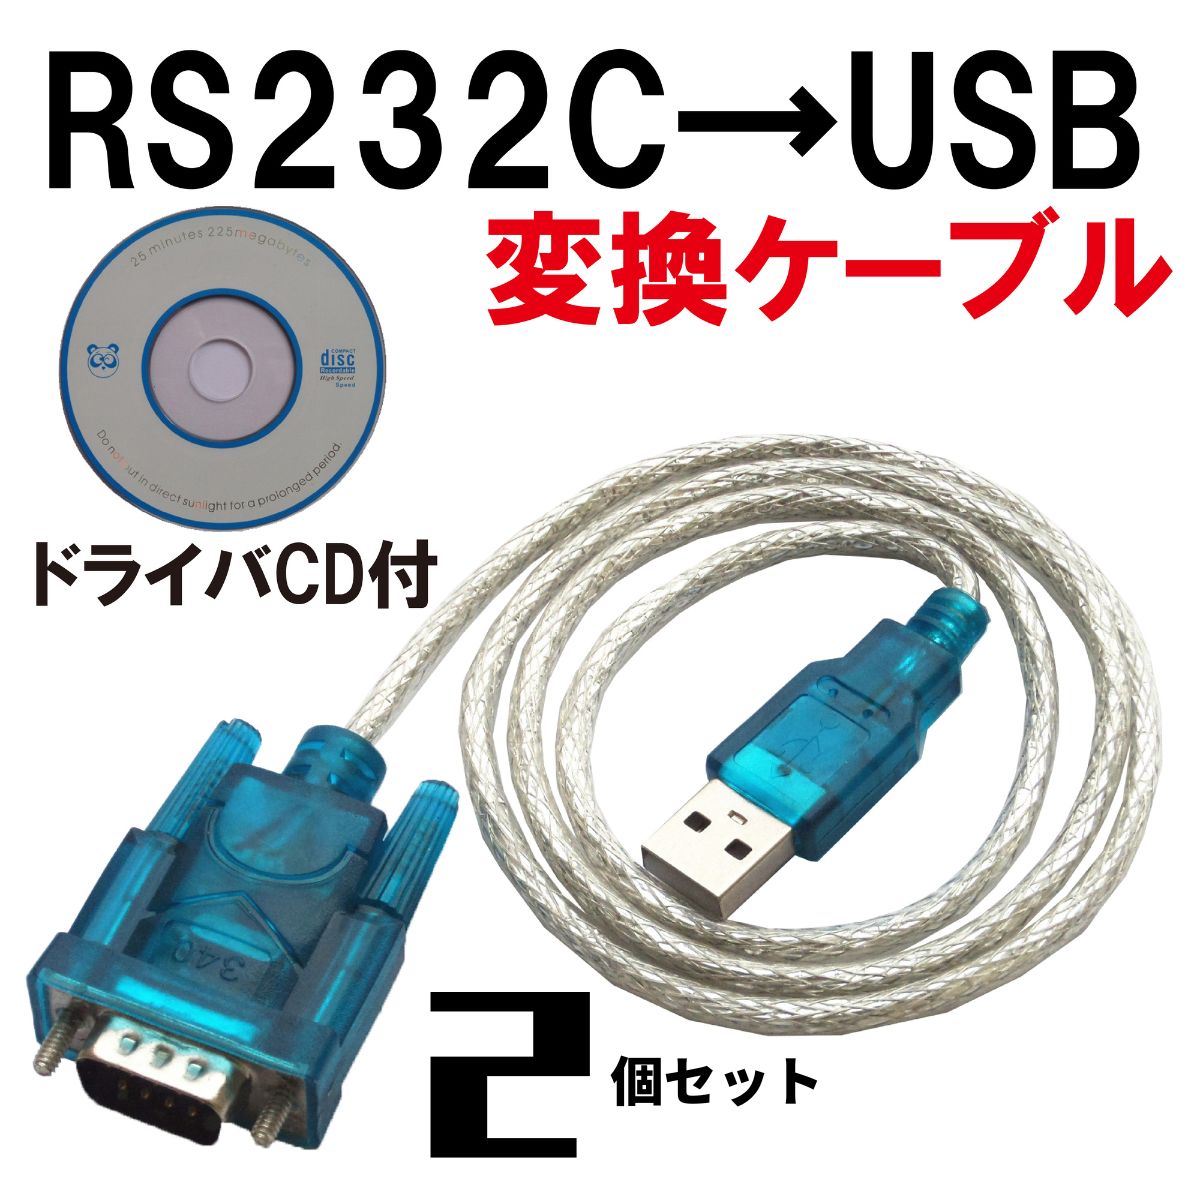 USB RS232C シリアル 変換 ケーブル D-SUB9ピン 80cm 動作